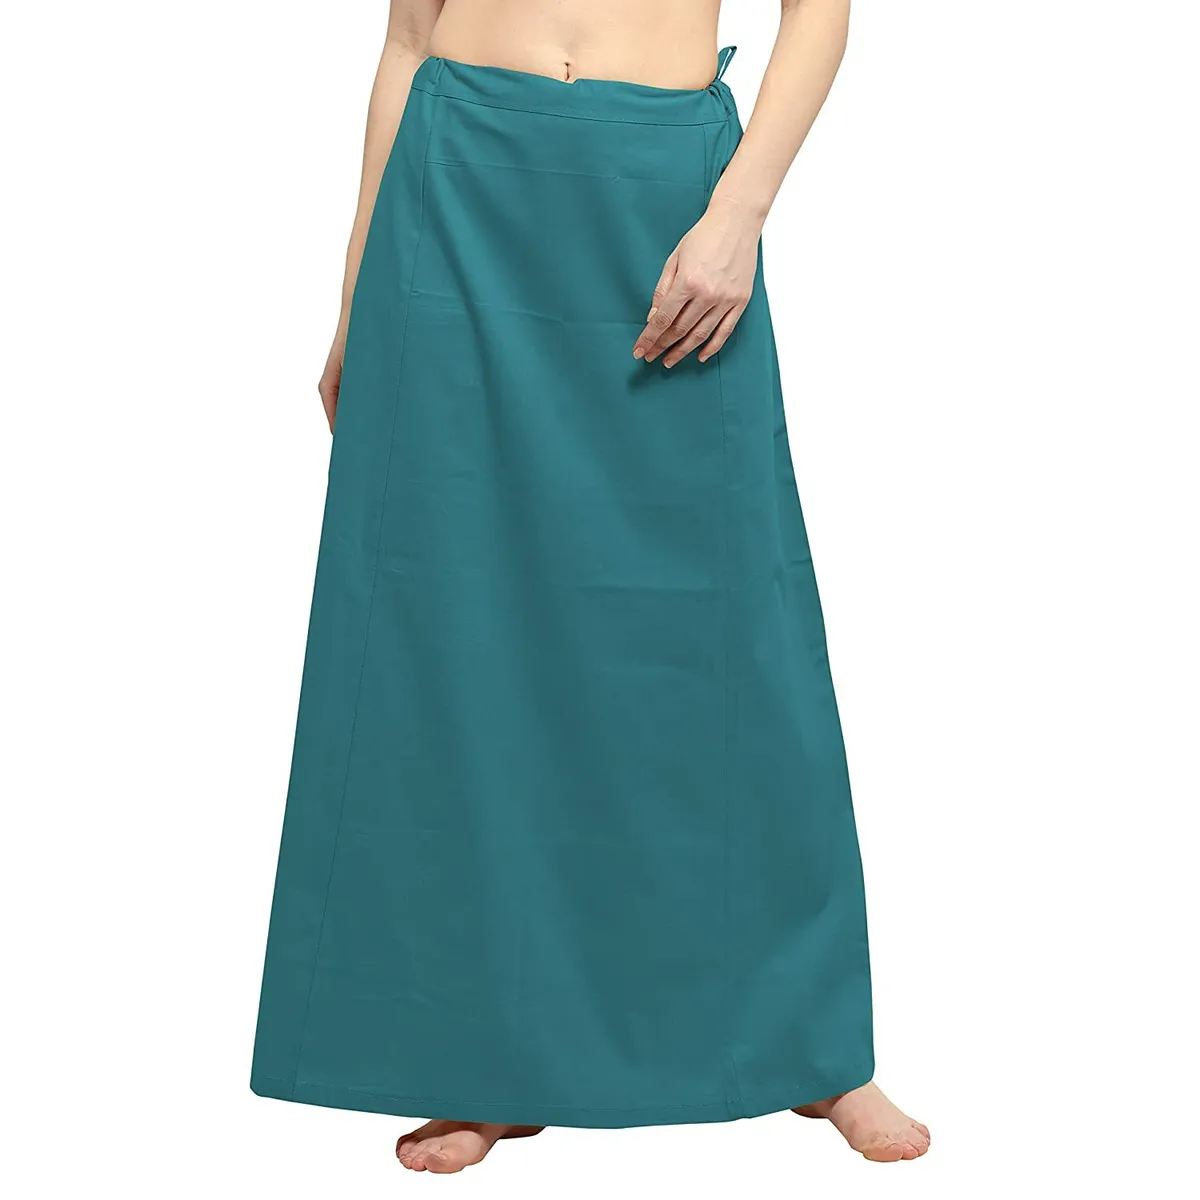 Cotton Women Petticoat Saree Underskirt Free Size Cotton Petticoat Teal Blue